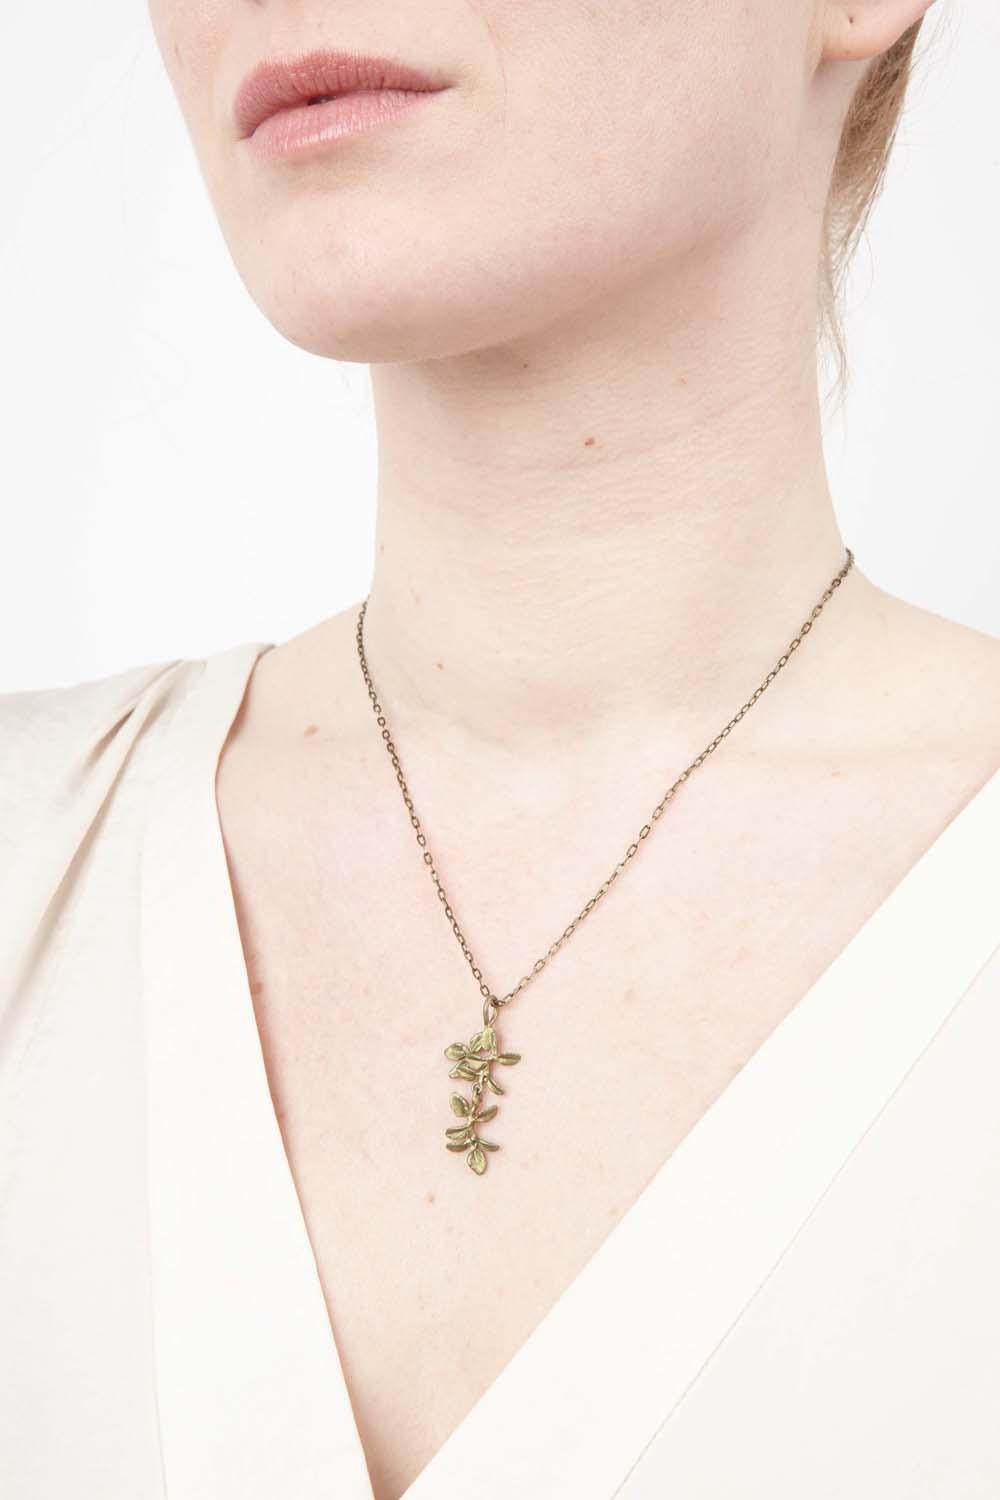 Petite Herb - Thyme Pendant - Michael Michaud Jewellery